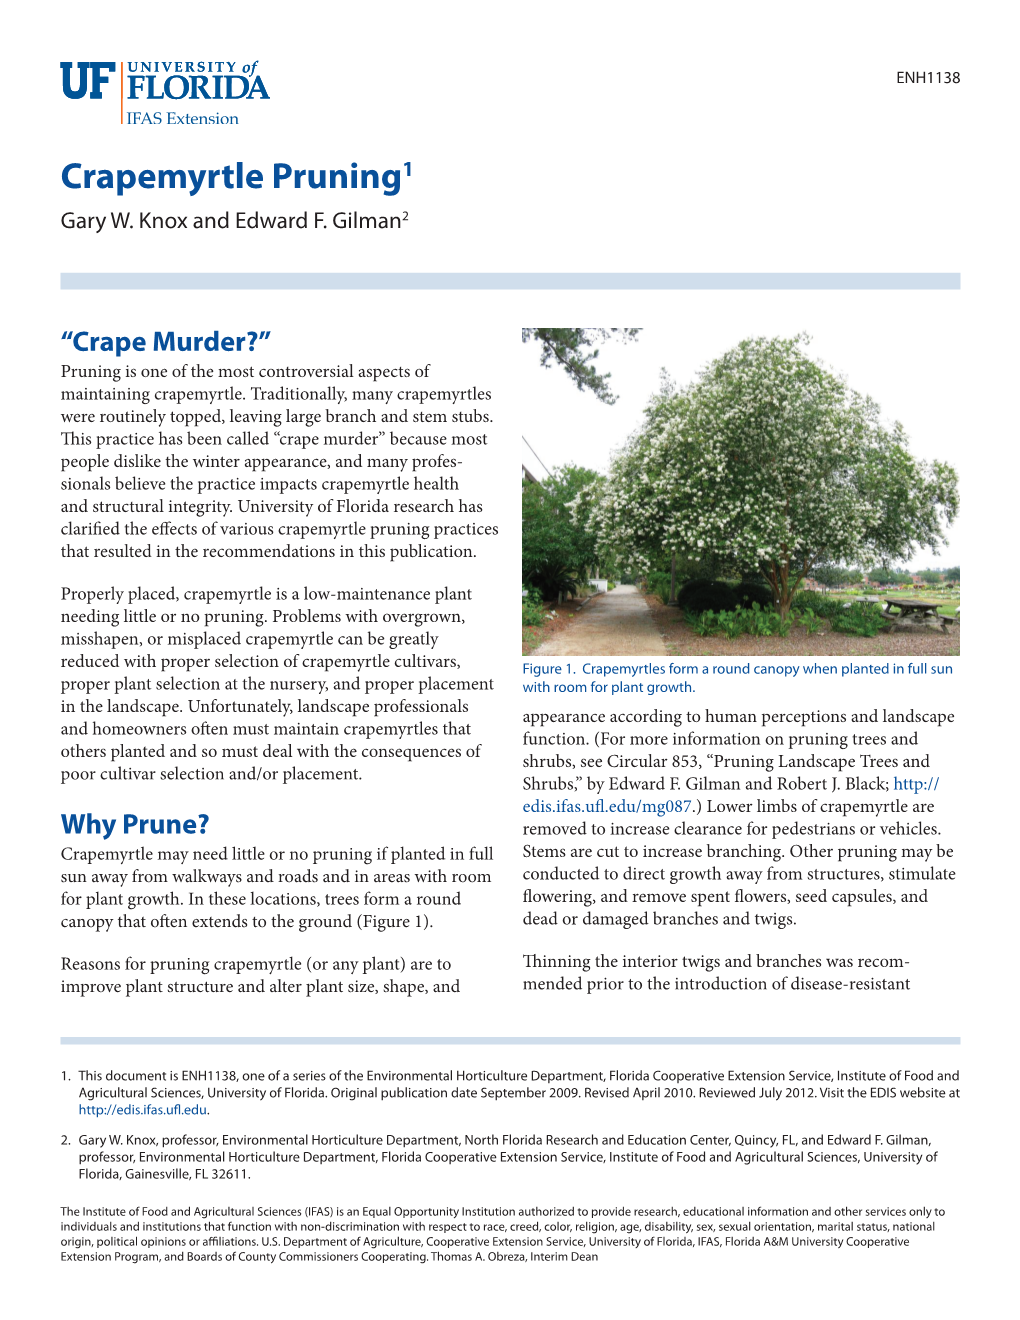 Crape Myrtle Pruning